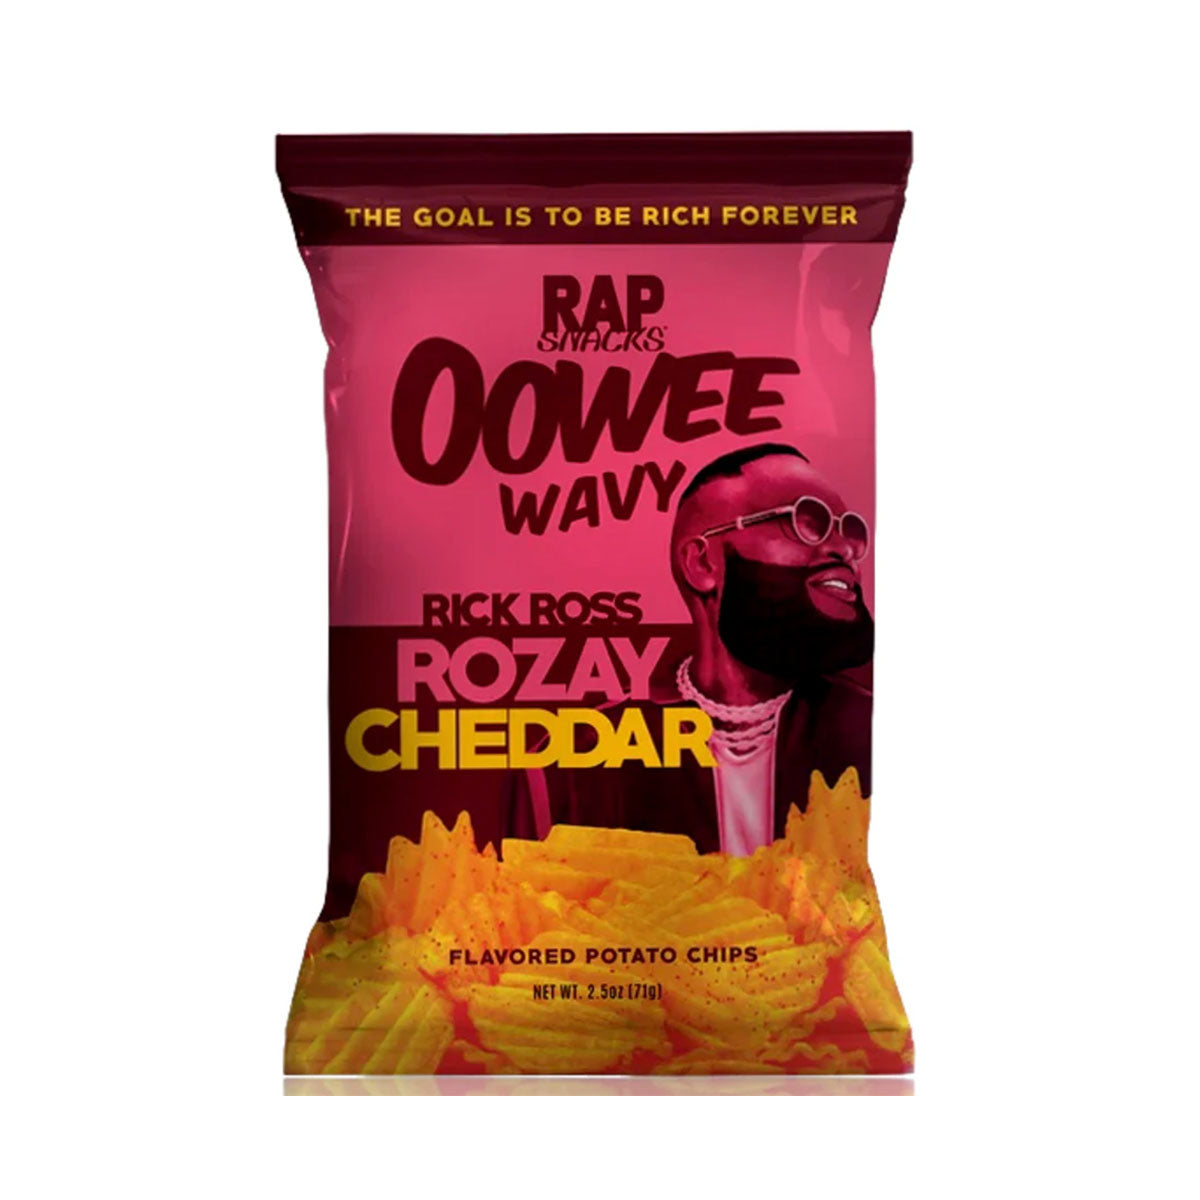 Rap Snacks Oowee Wavy Rick Ross Roozay Cheddar | 24 x 71g